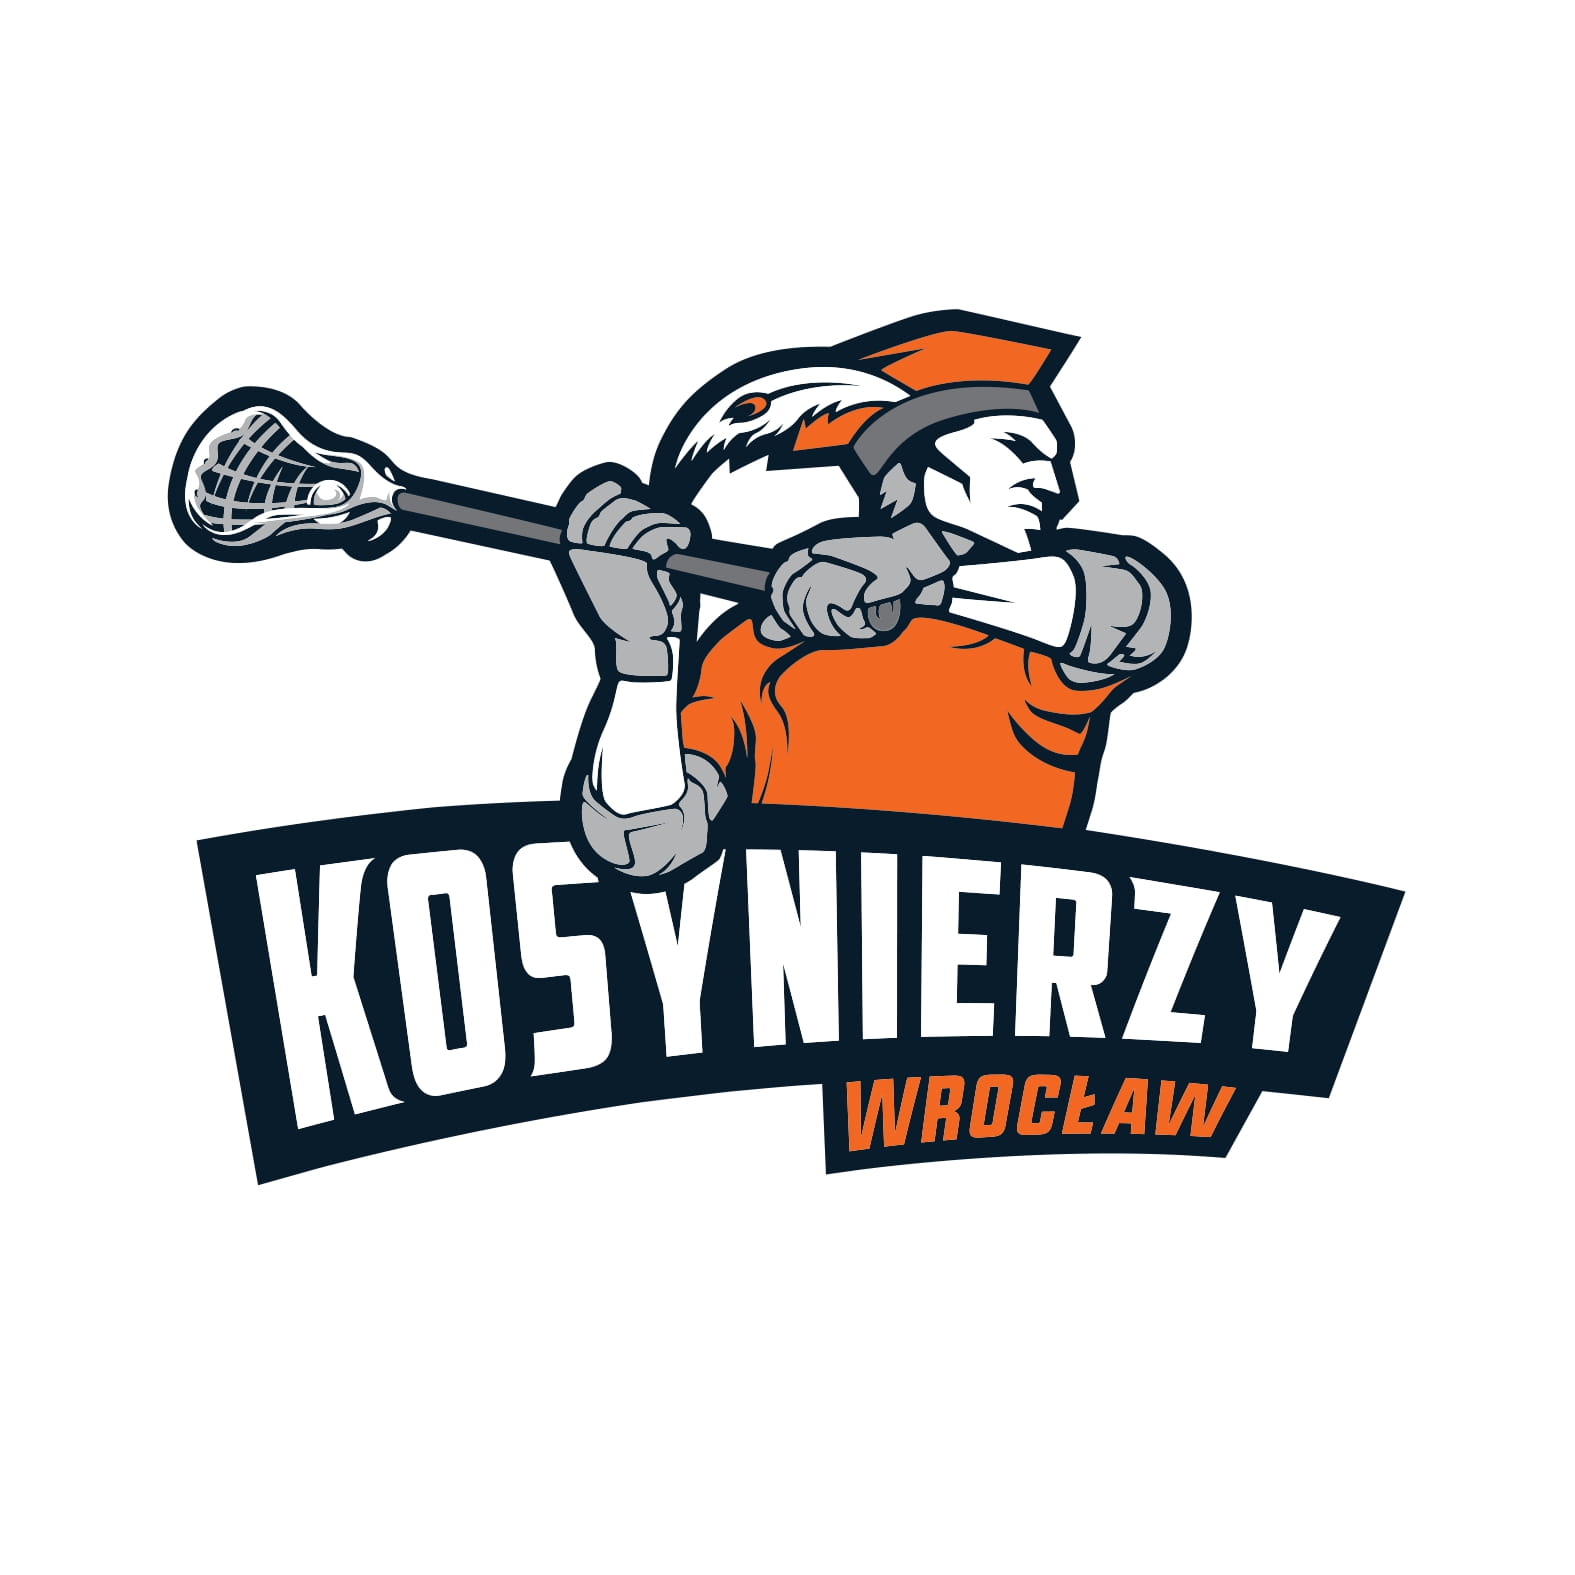 Kosynierzy Wroclaw full logo 01